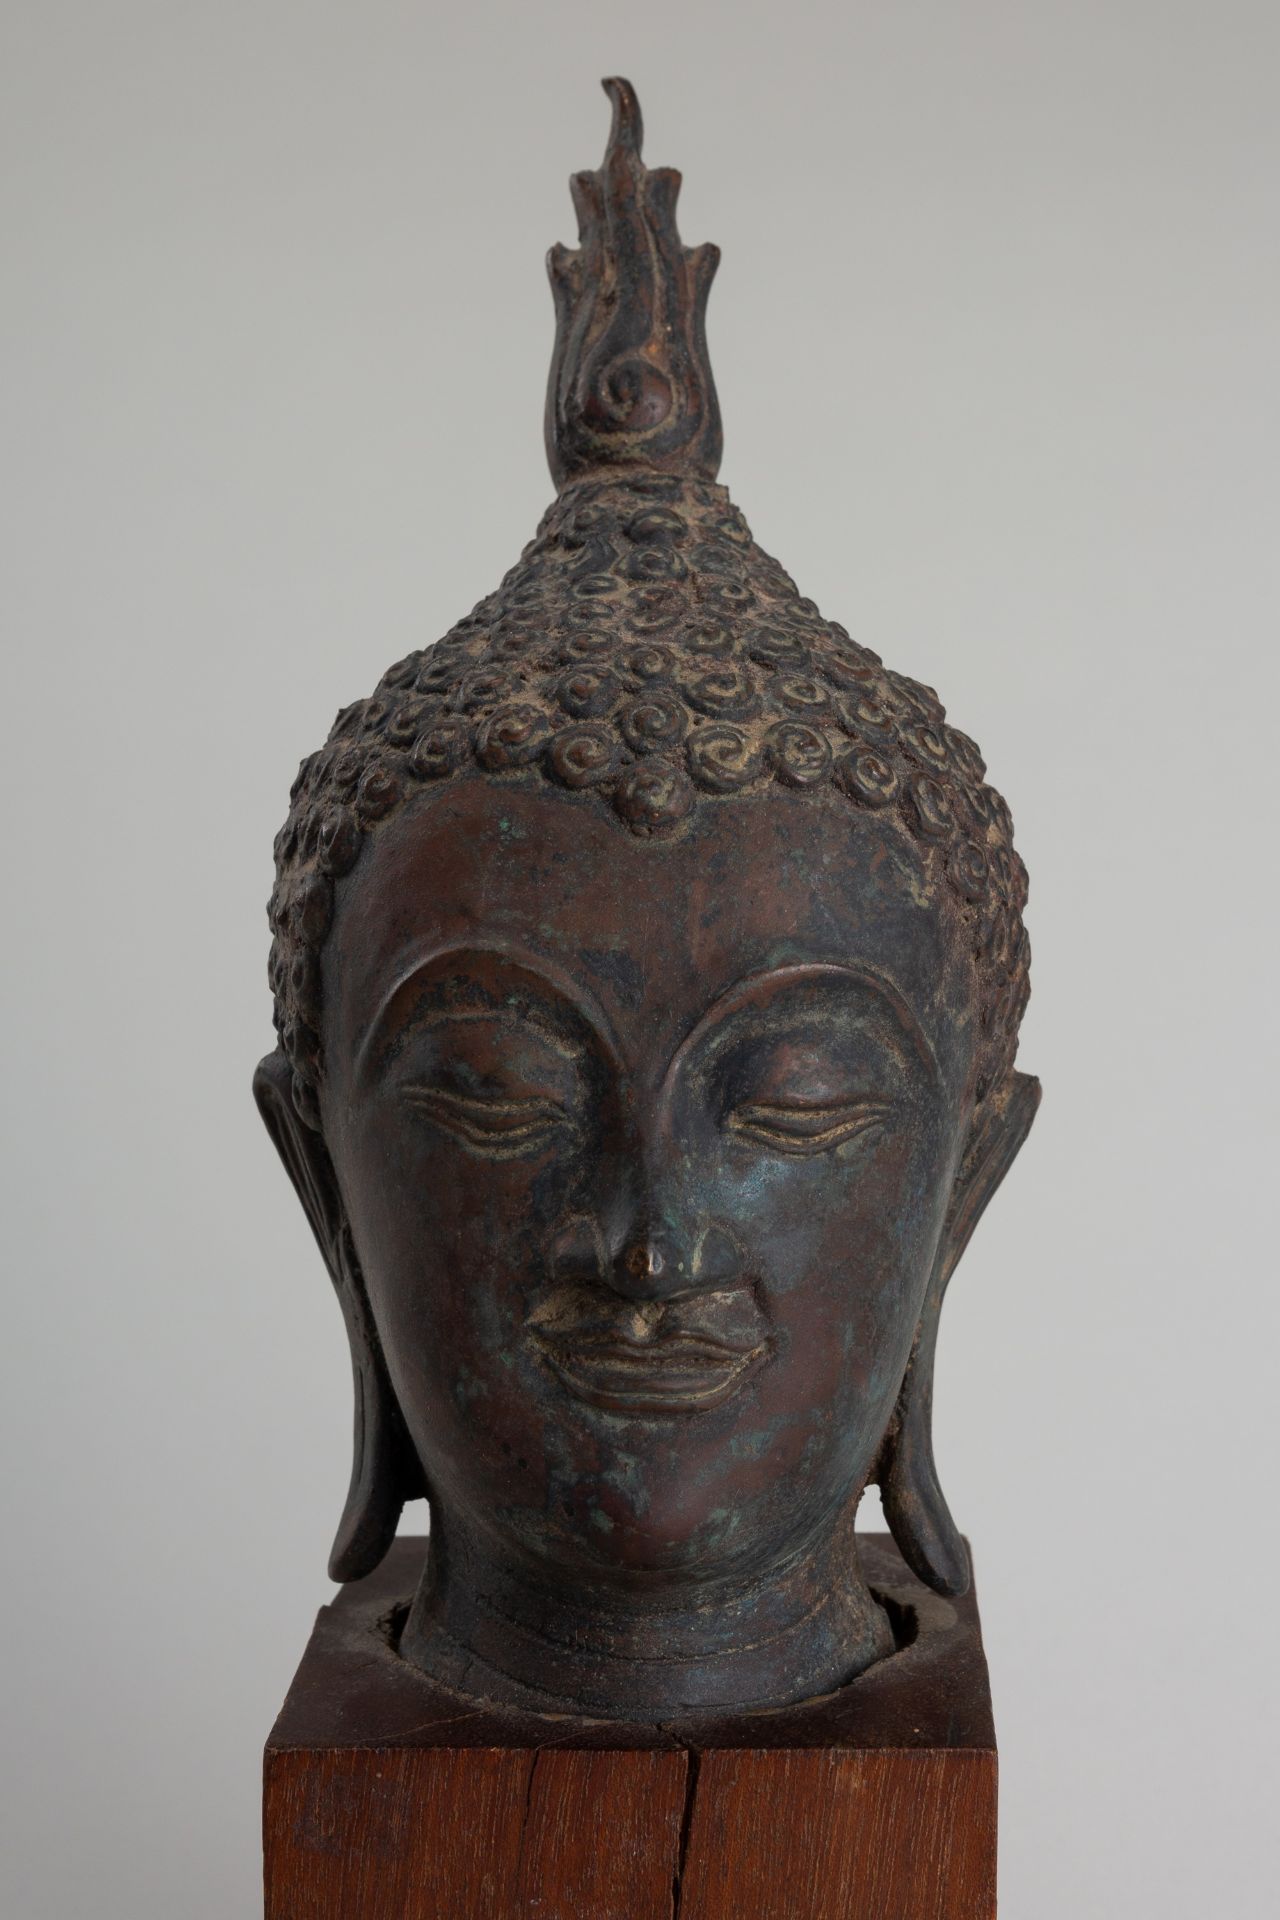 A BRONZE HEAD OF BUDDHA, SUKHOTHAI STYLE